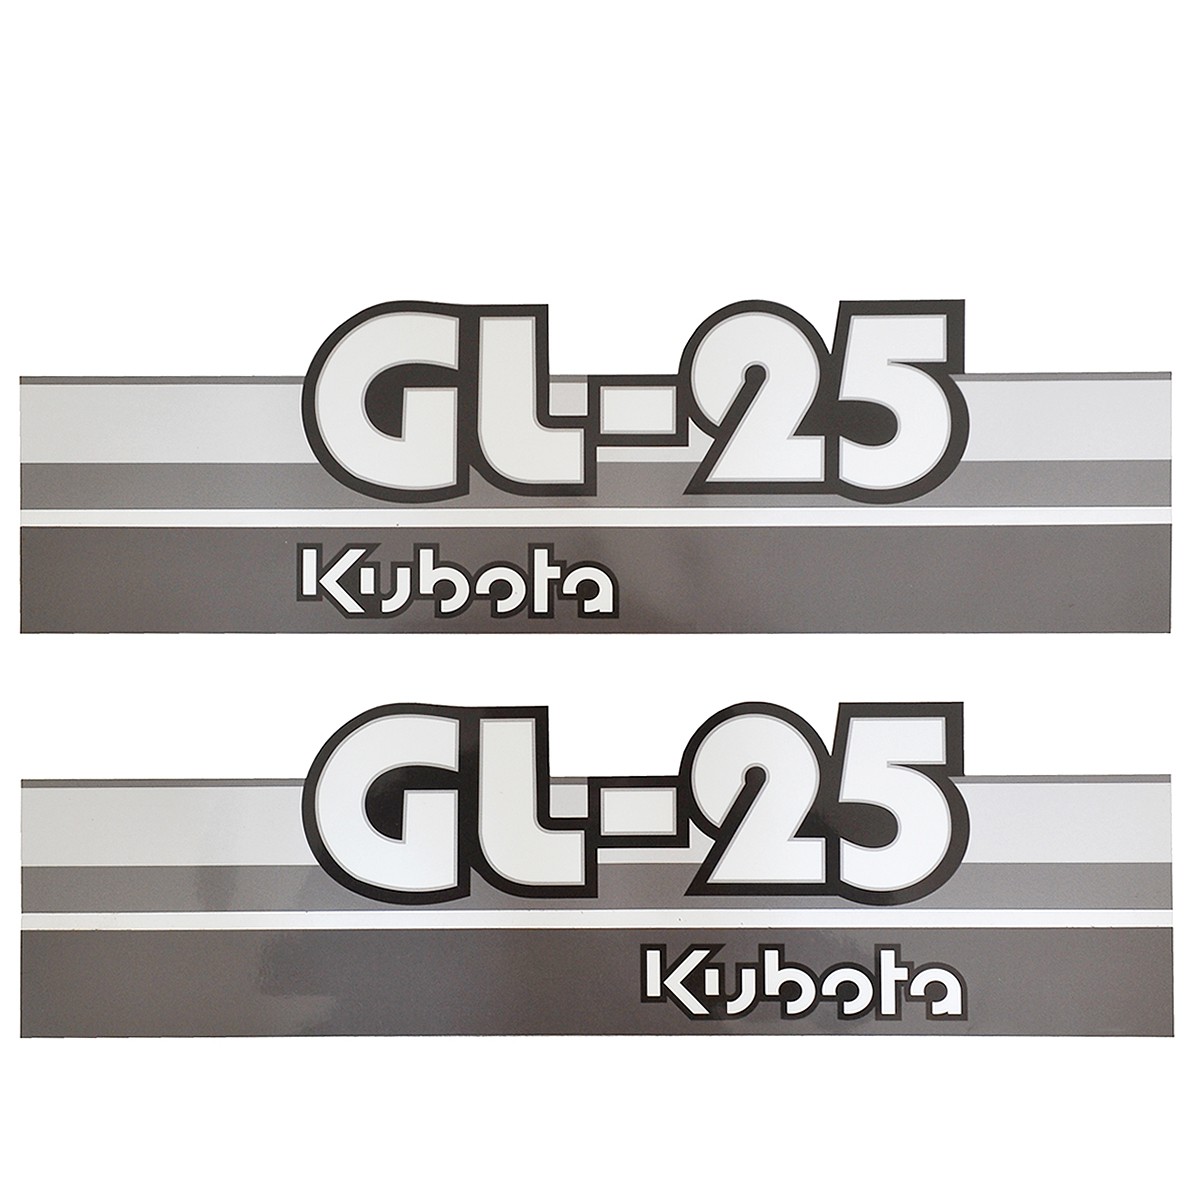 Samolepky Kubota GL25